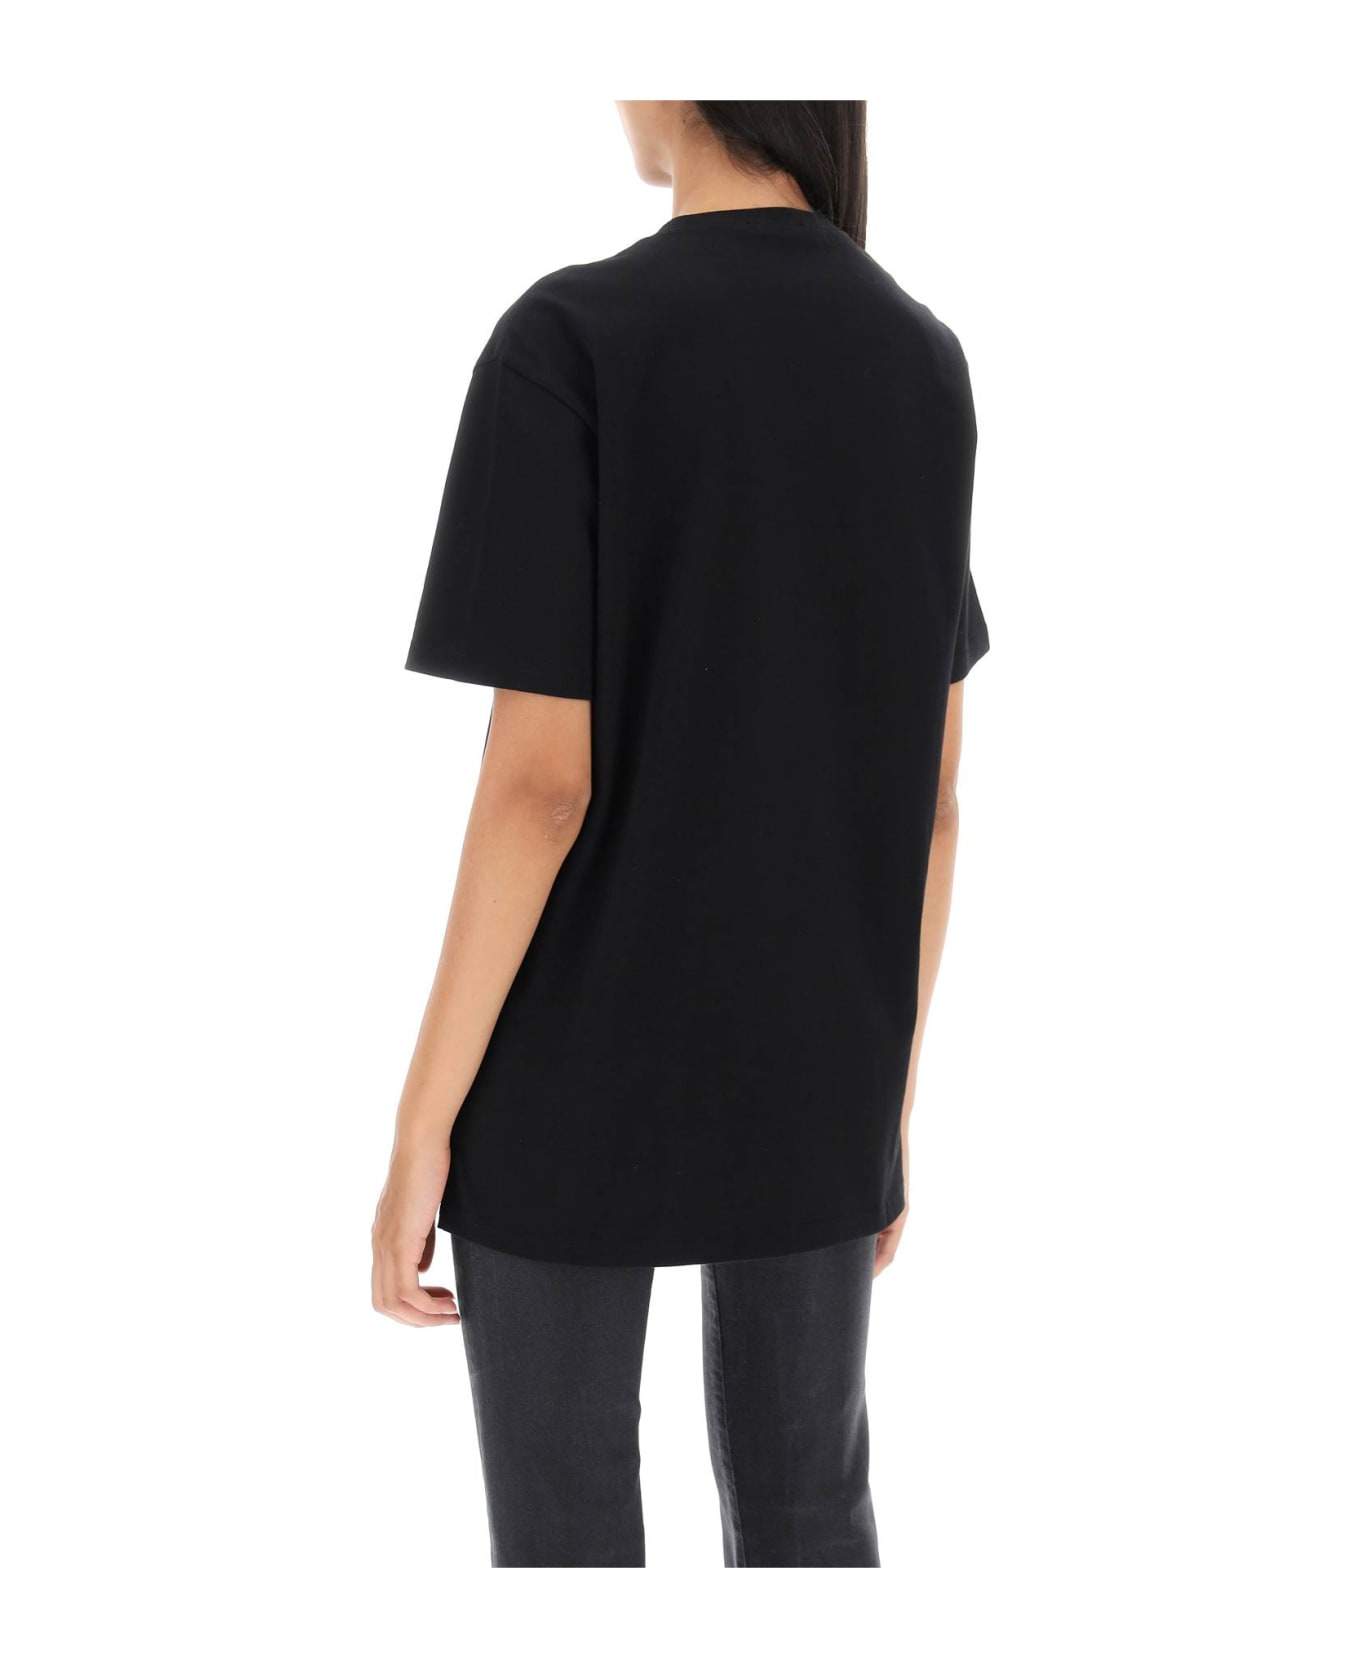 Versace Embroidered Logo T-shirt - BLACK WHITE (Black)